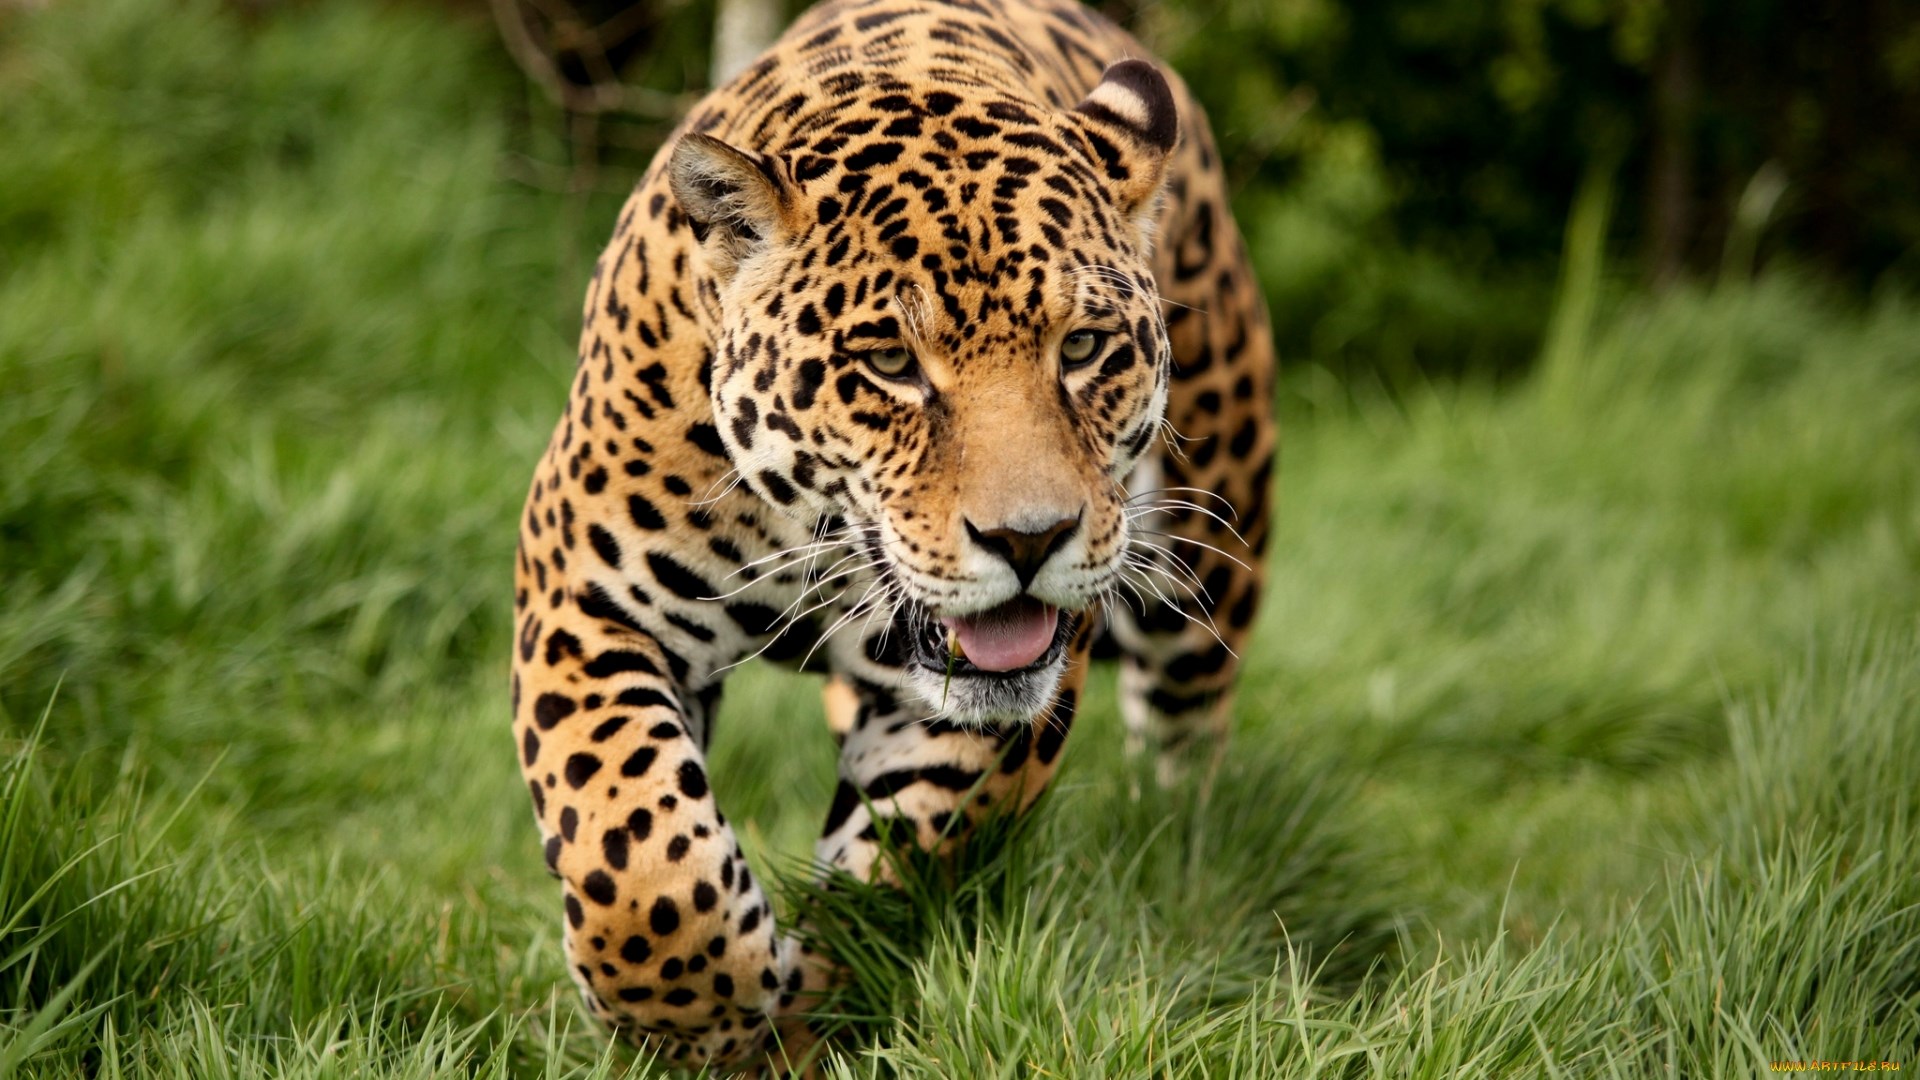 Jaguar in the wild